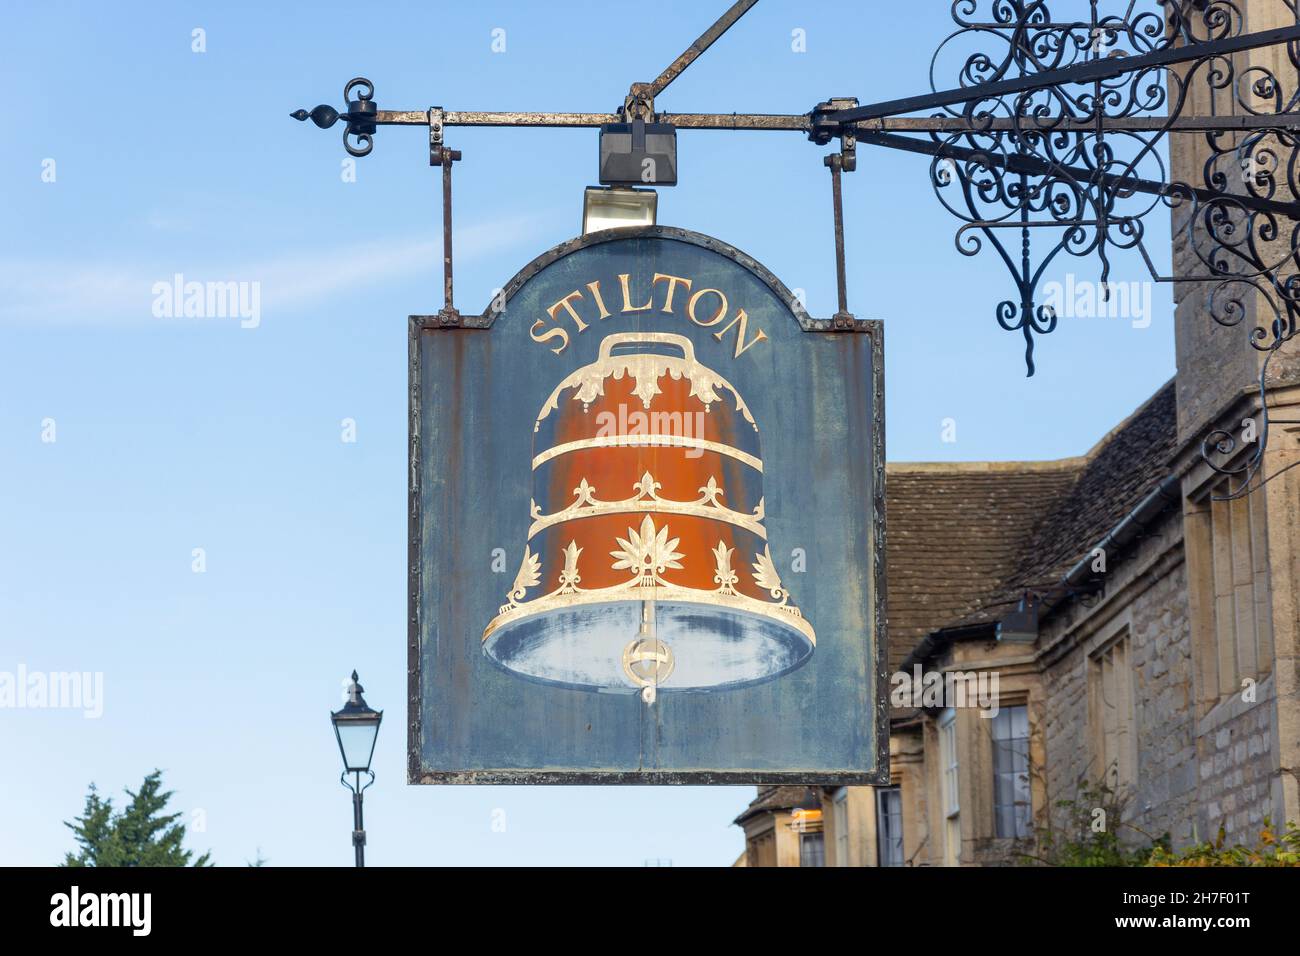 Pub sign, 15th century The Bell Inn, High Street, Stilton, Cambridgeshire, England, United Kingdom Stock Photo